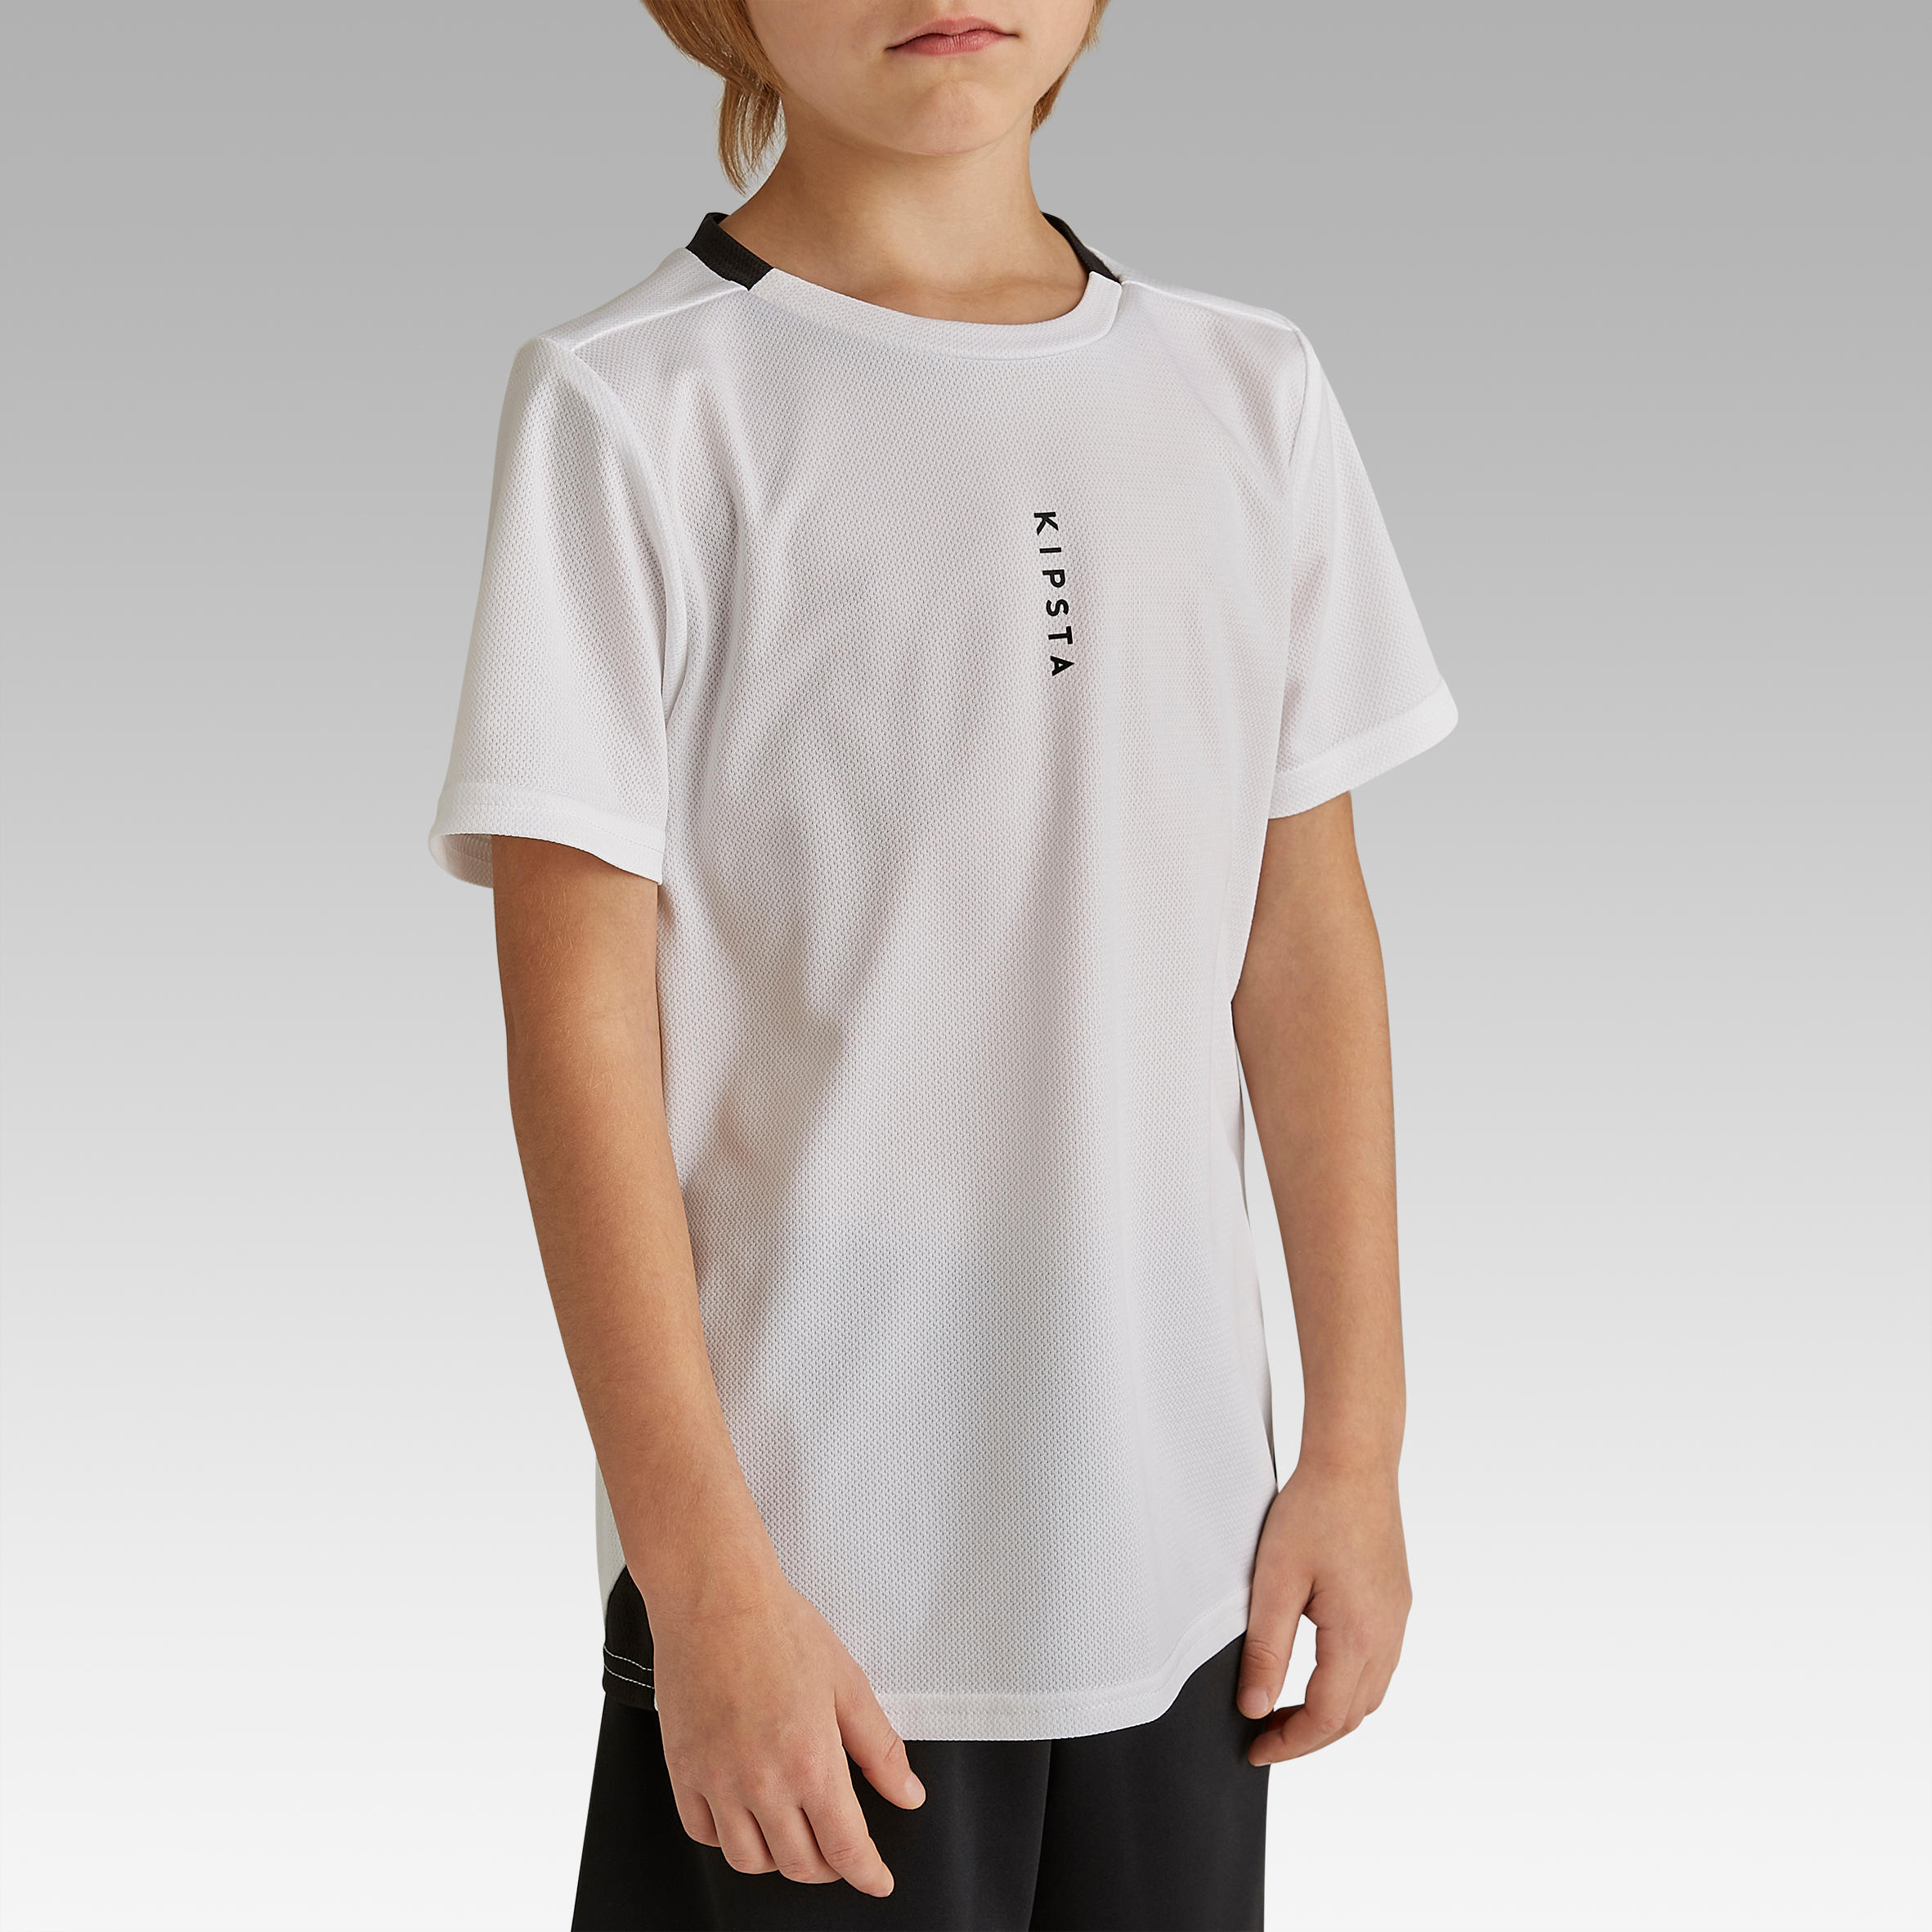 Refurbished Kids Football Shirt Essential - A Grade 4/7